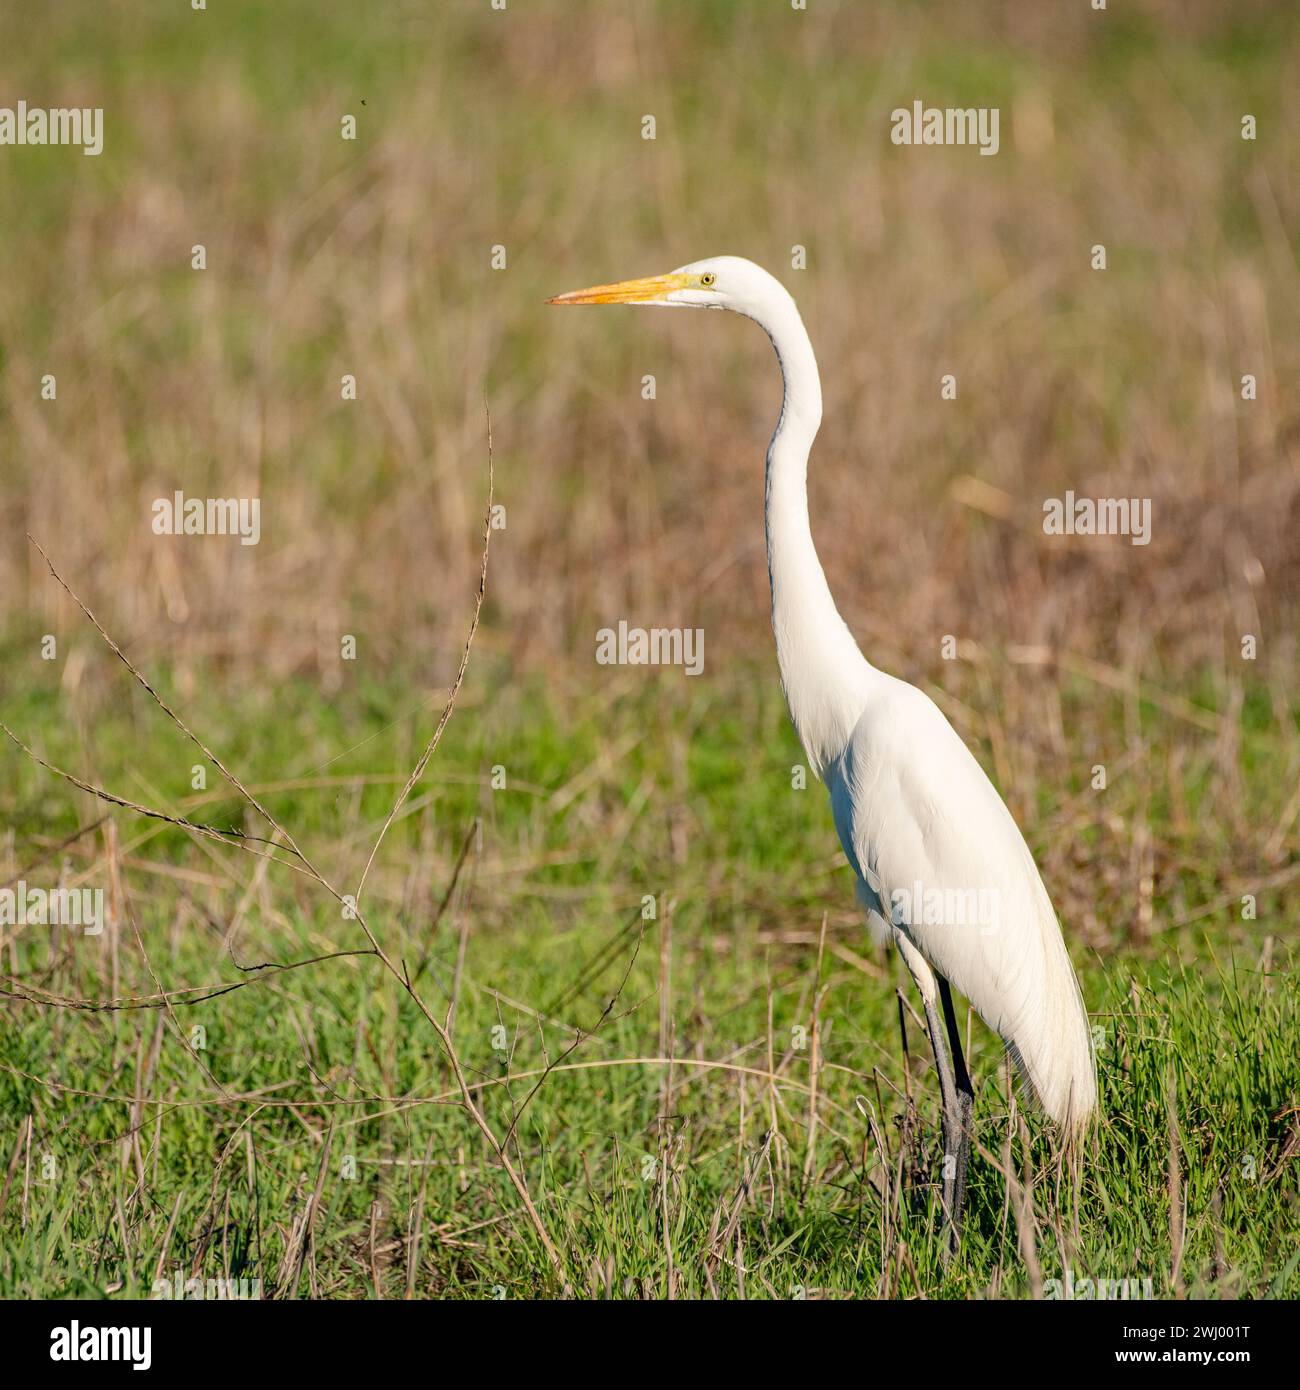 Great White Heron, Natural Habitat, Wildlife, Bird, Tall Grass, Taking Off, Flying, Wetland, Marshland, Waterbird Stock Photo